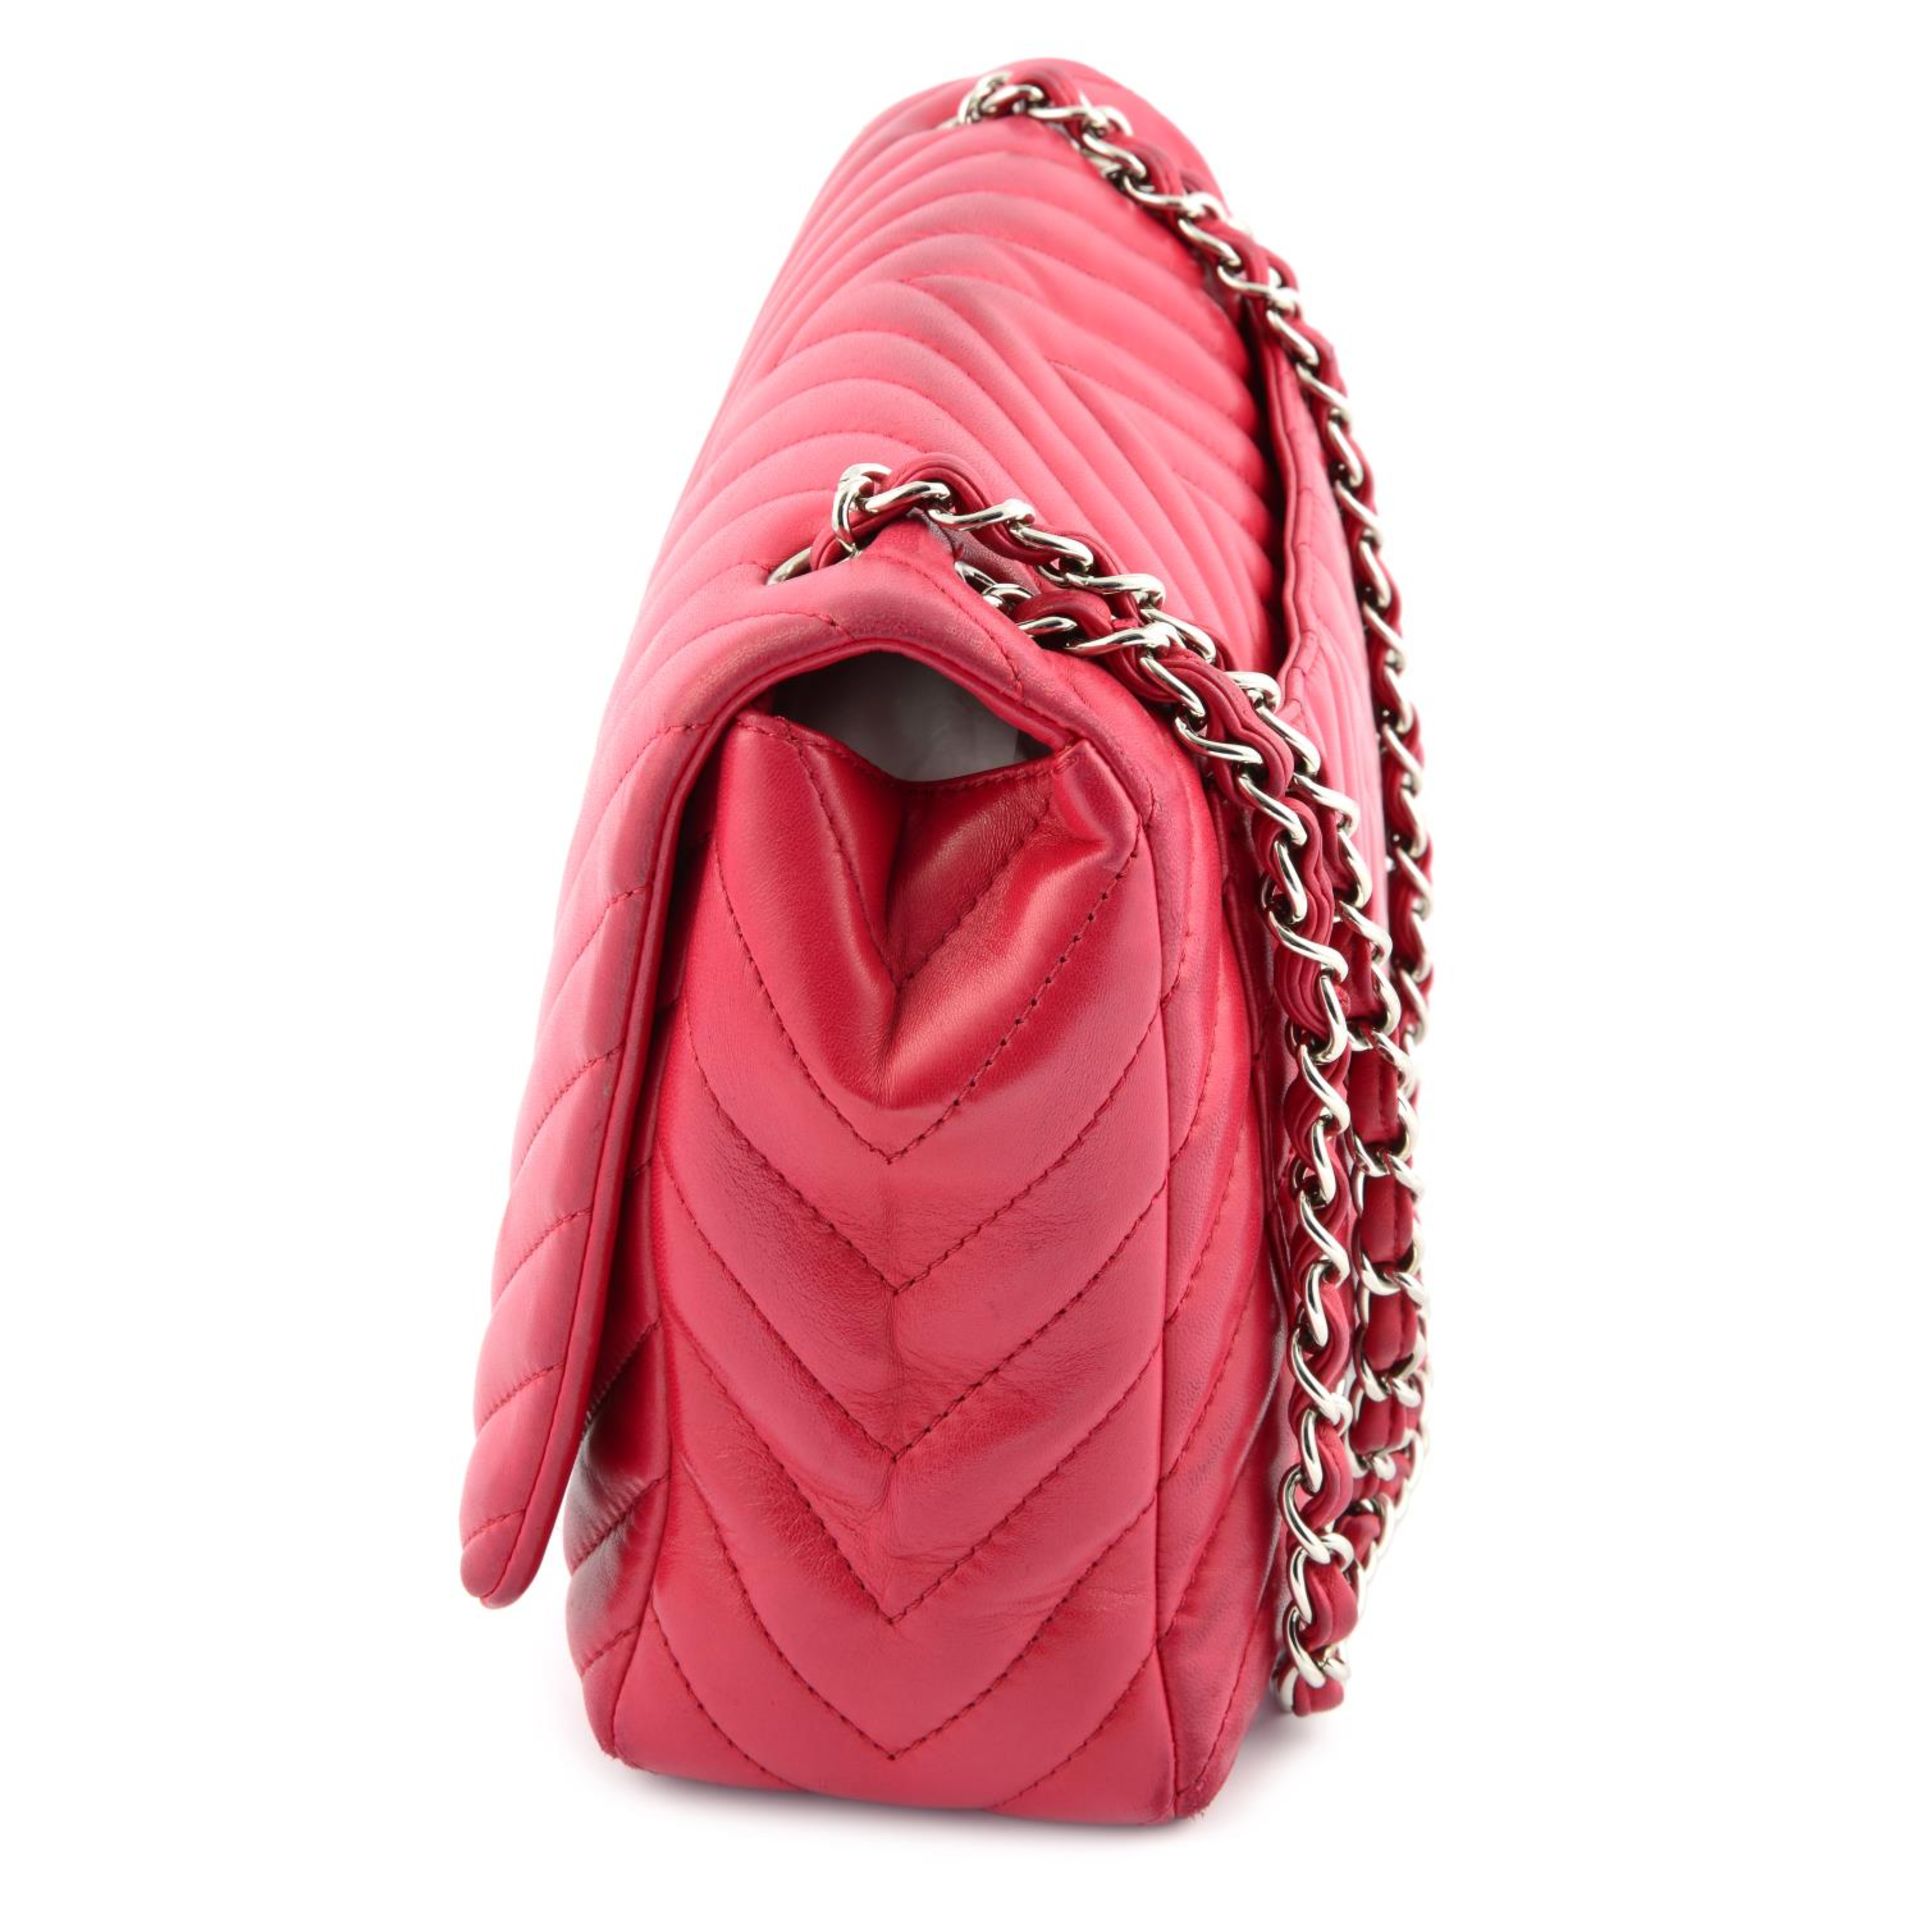 CHANEL - an amaranth red Maxi Classic Flap handbag. - Image 3 of 7